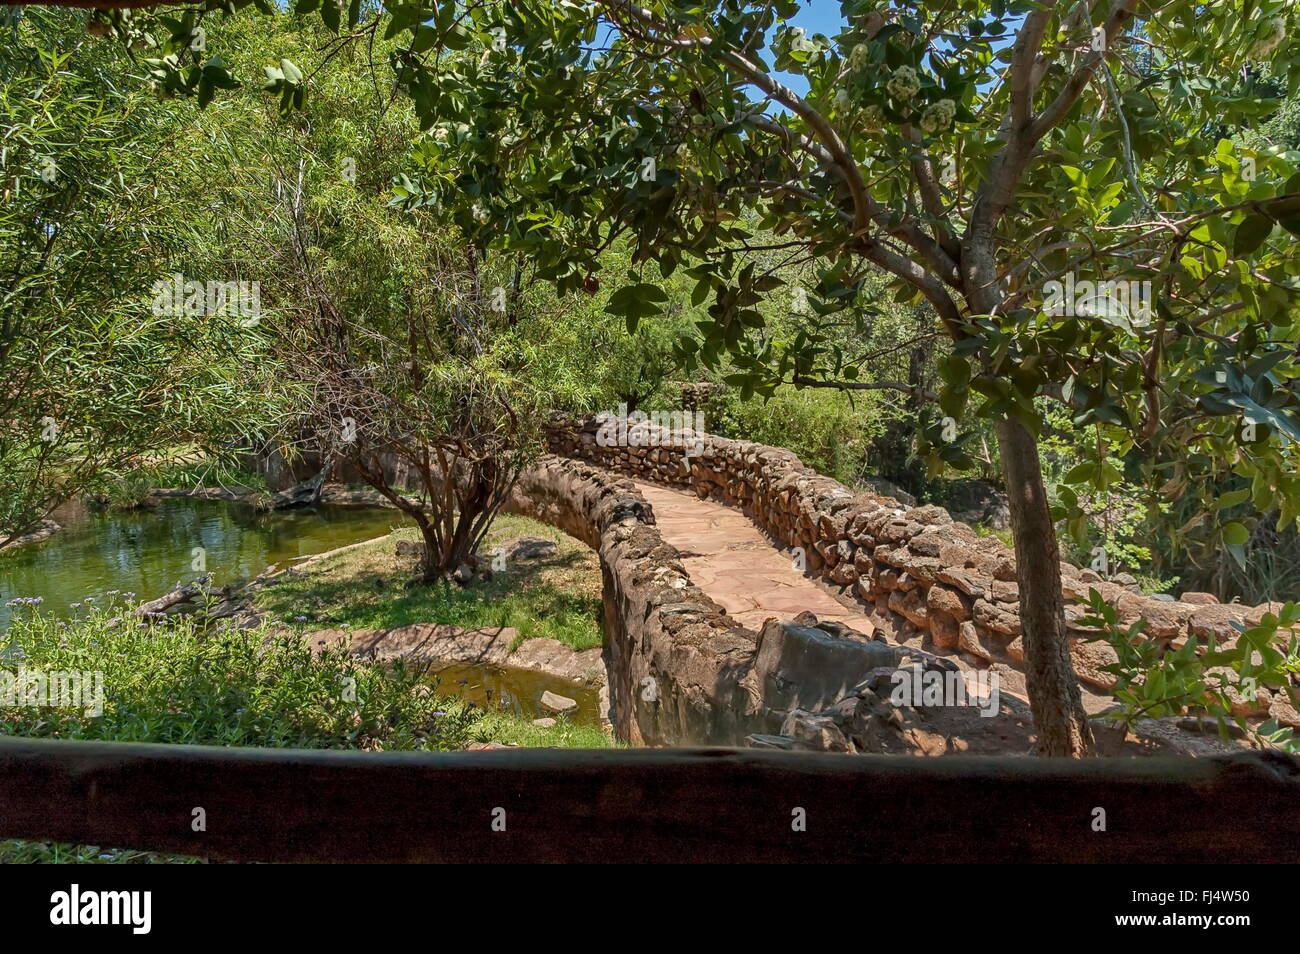 Walk To Crocodile In Kwena Gardens In Sun City South Africa Stock